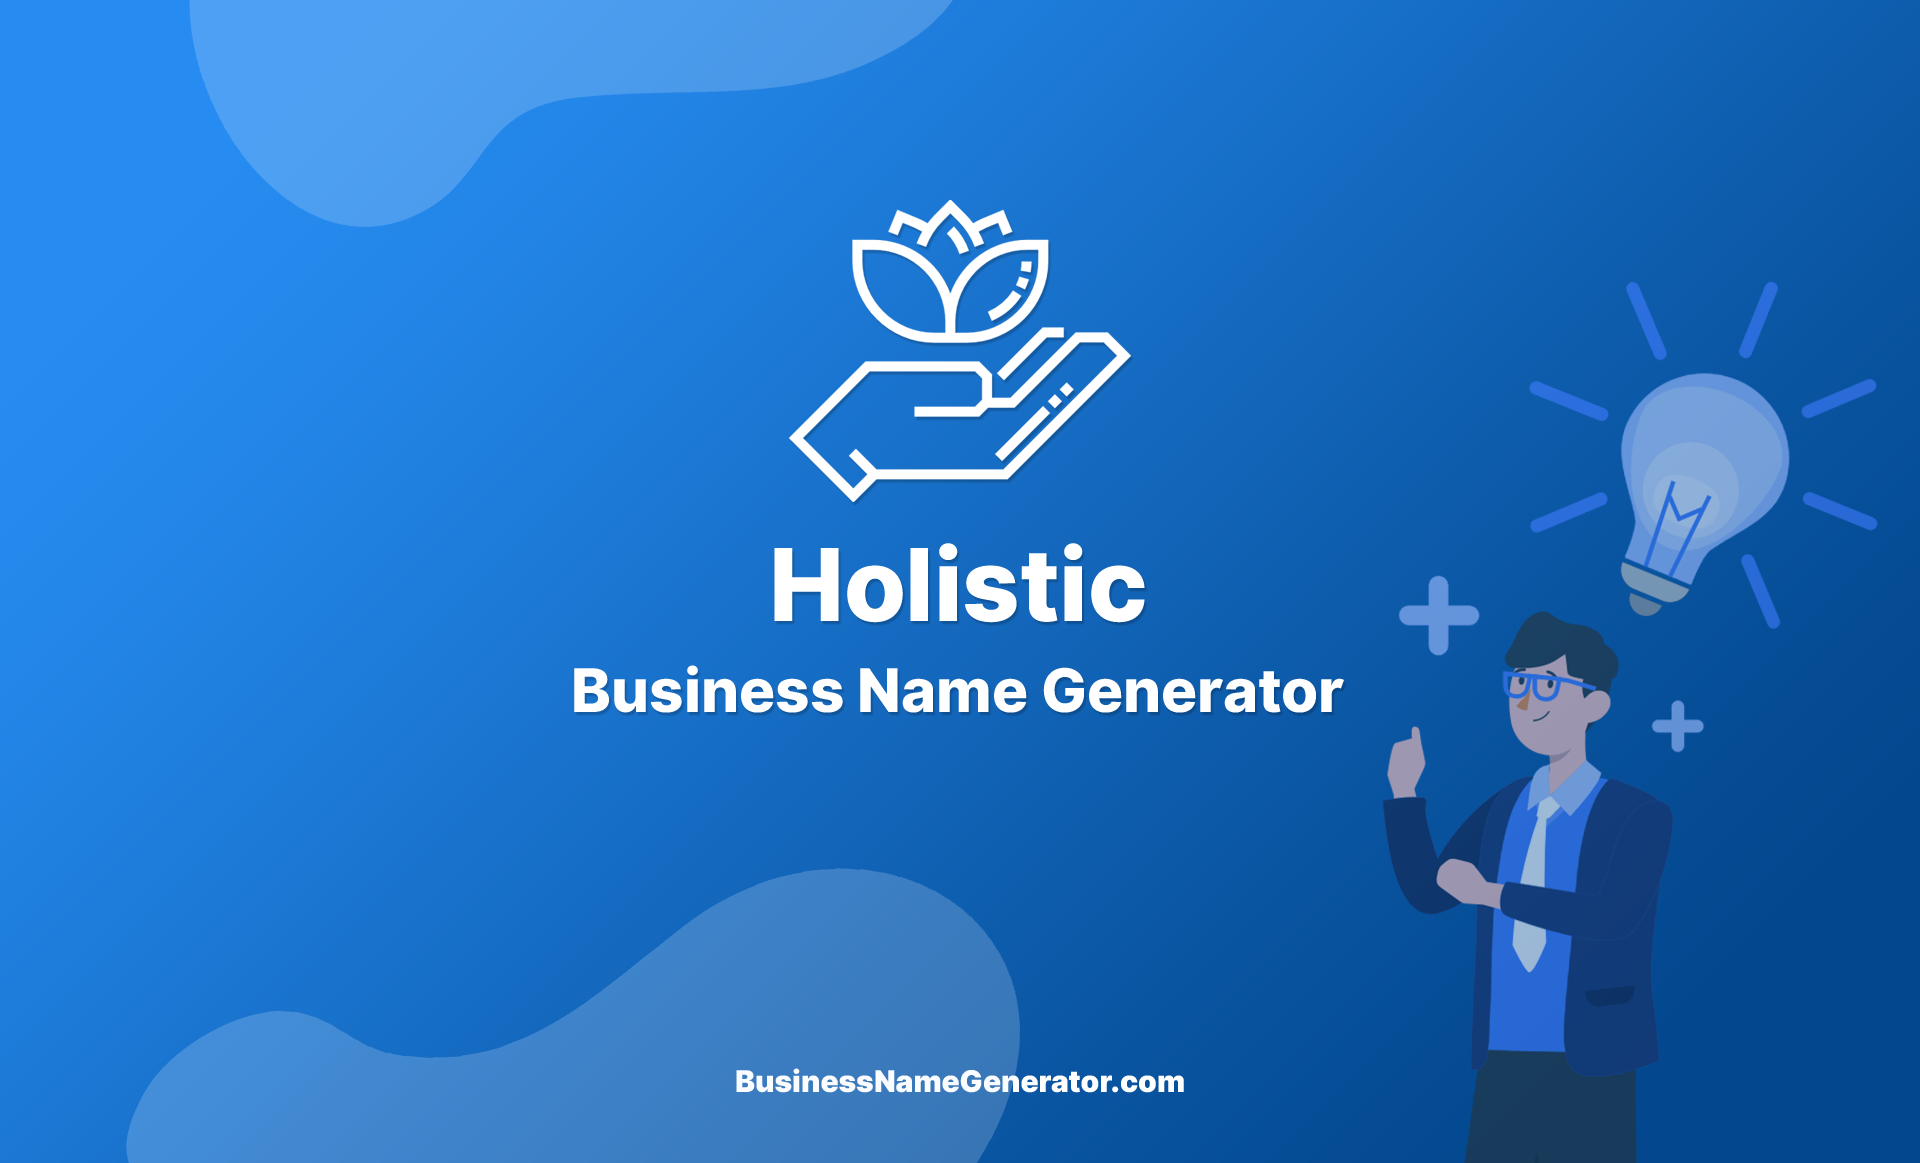 Holistic Business Name Generator, Ideas & Guide